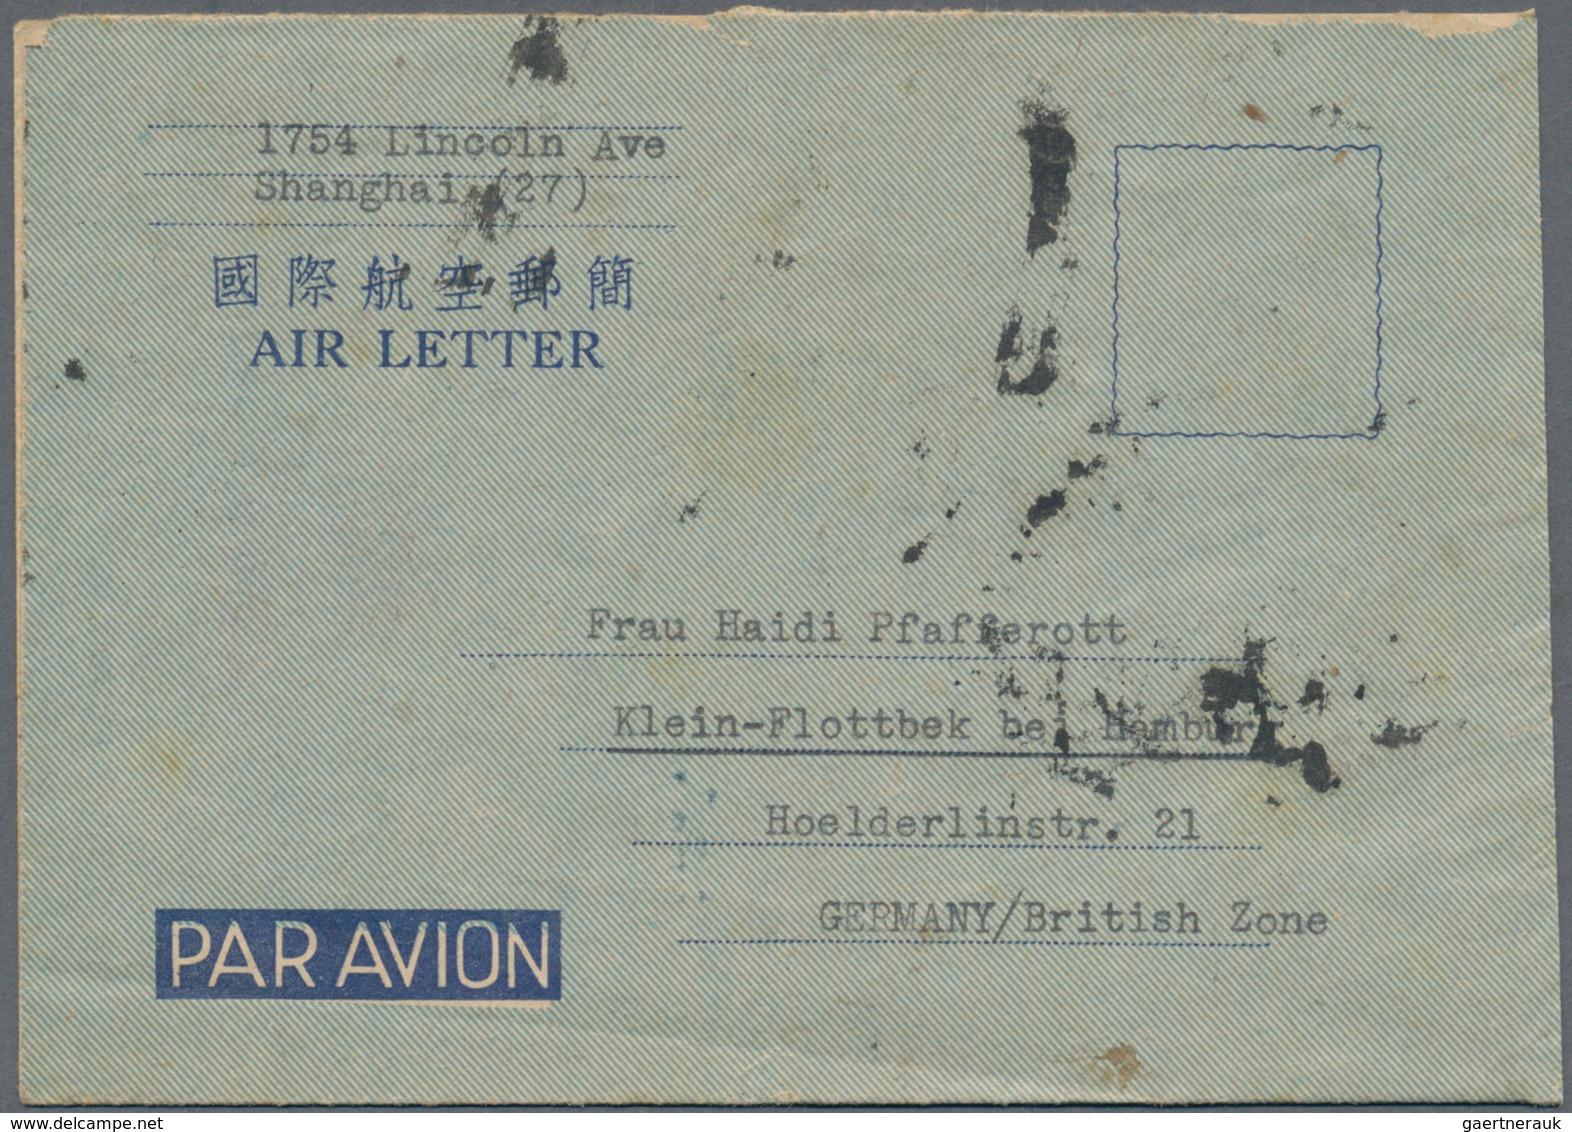 08220 China - Ganzsachen: 1949,  SYS $500 (5), $1000, $5000 Tied "SHANGHAI 16.5.49" To Reverse Of Official - Ansichtskarten